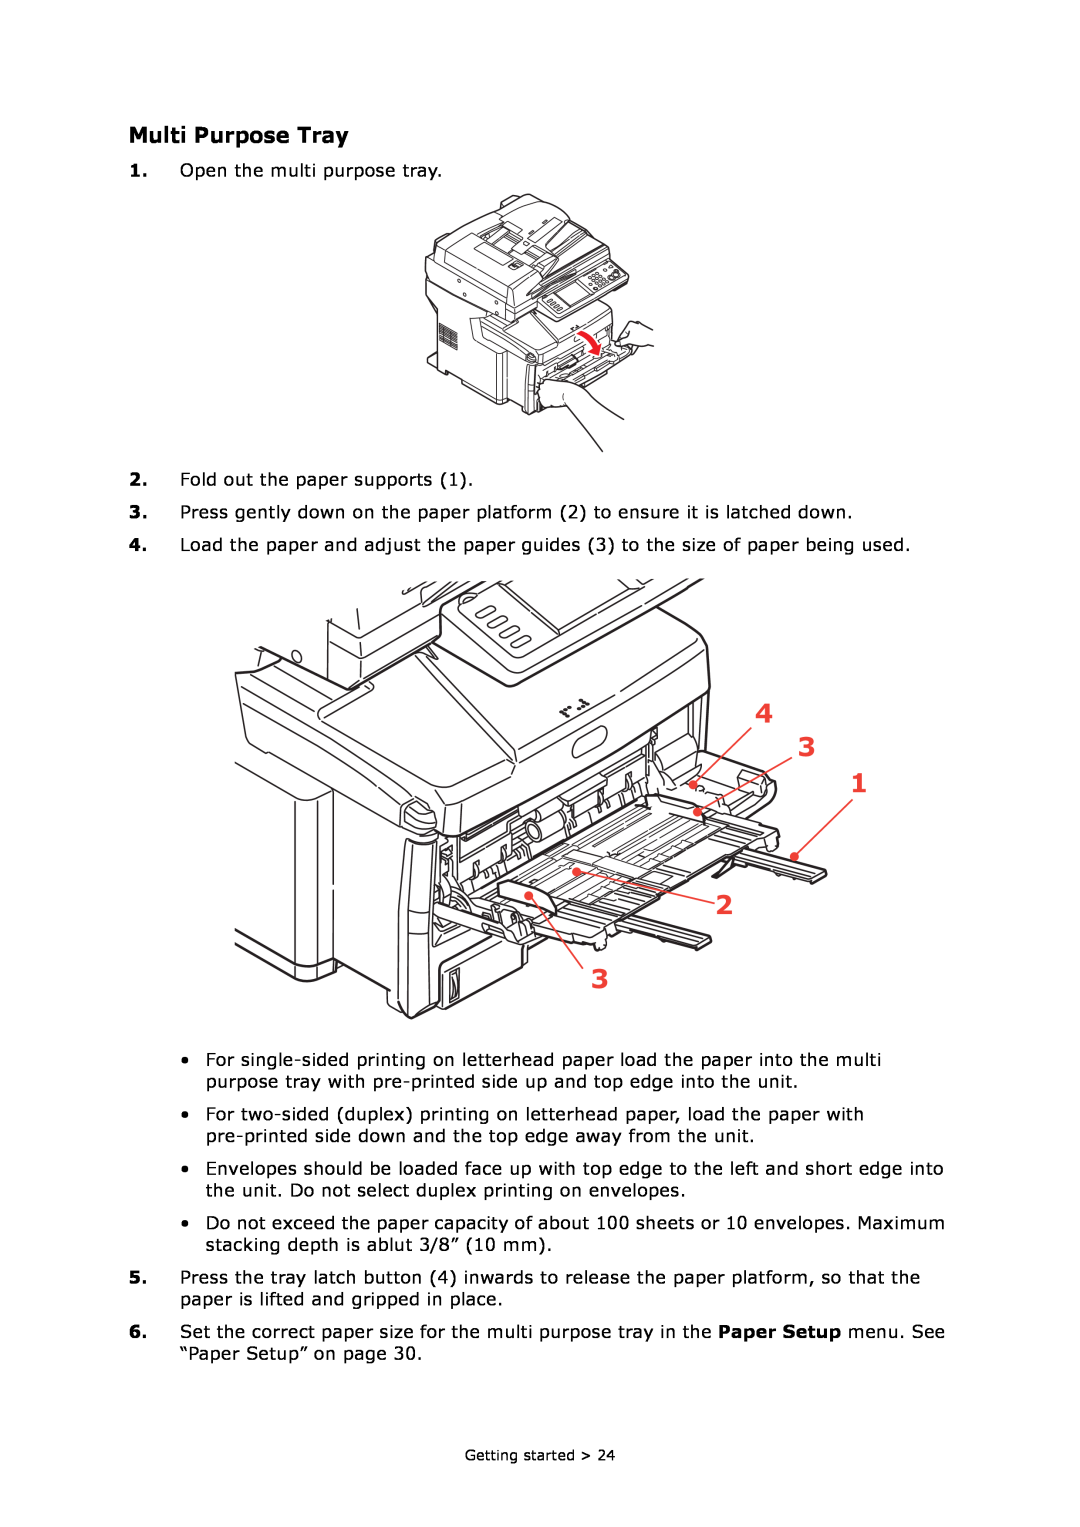 Oki MC860n MFP manual Multi Purpose Tray, Open the multi purpose tray 2. Fold out the paper supports 